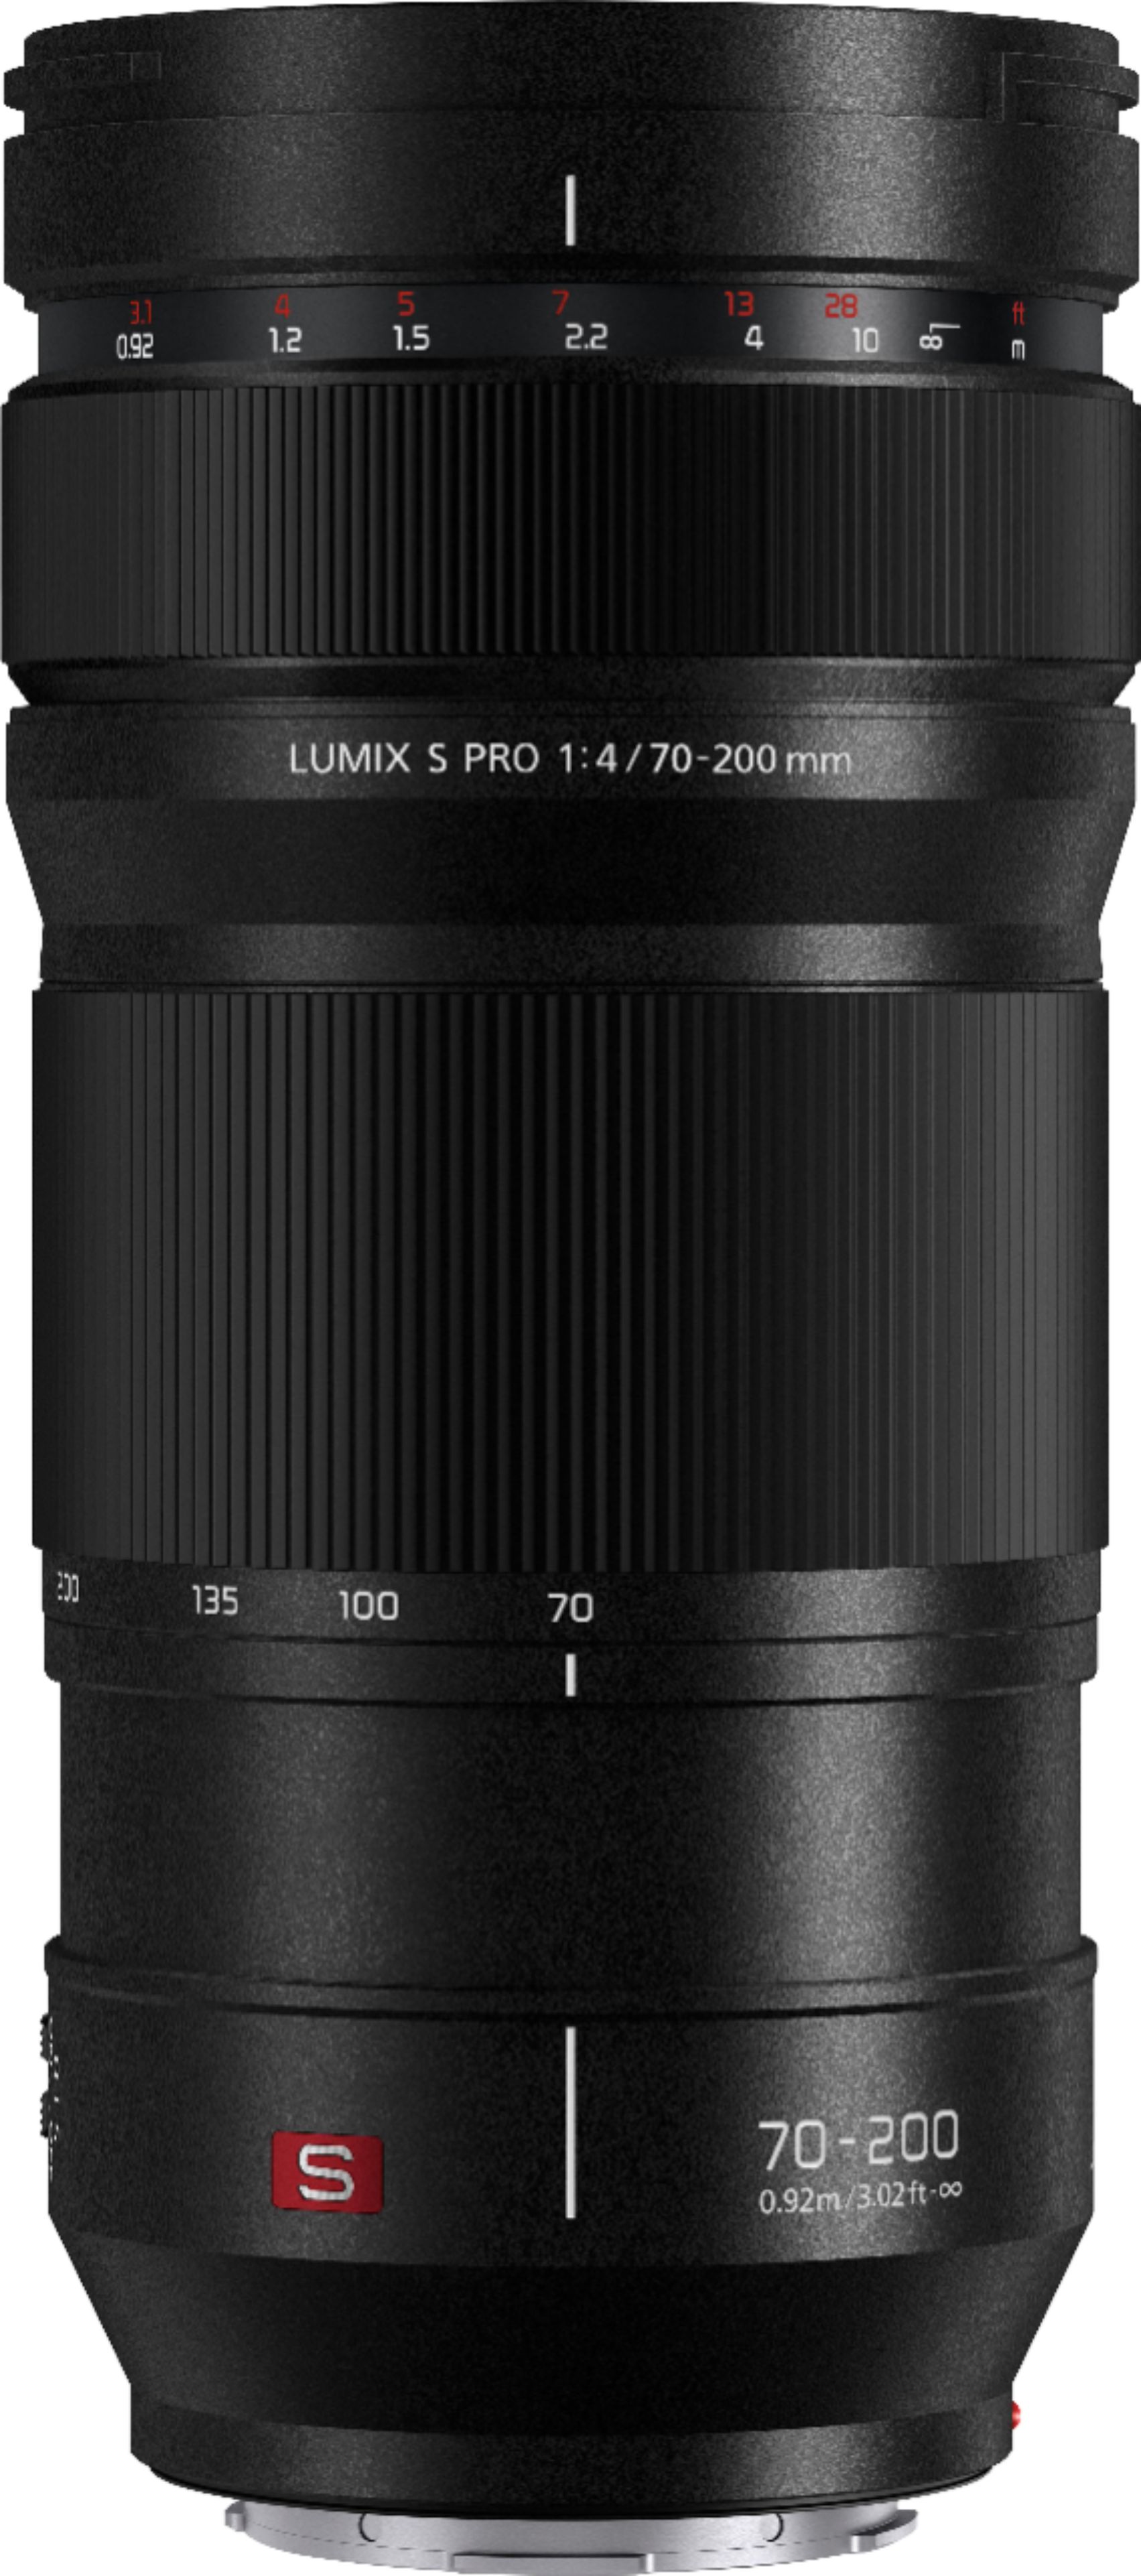 Panasonic LUMIX S PRO 70-200mm F4 Telephoto Lens, Full-Frame L 